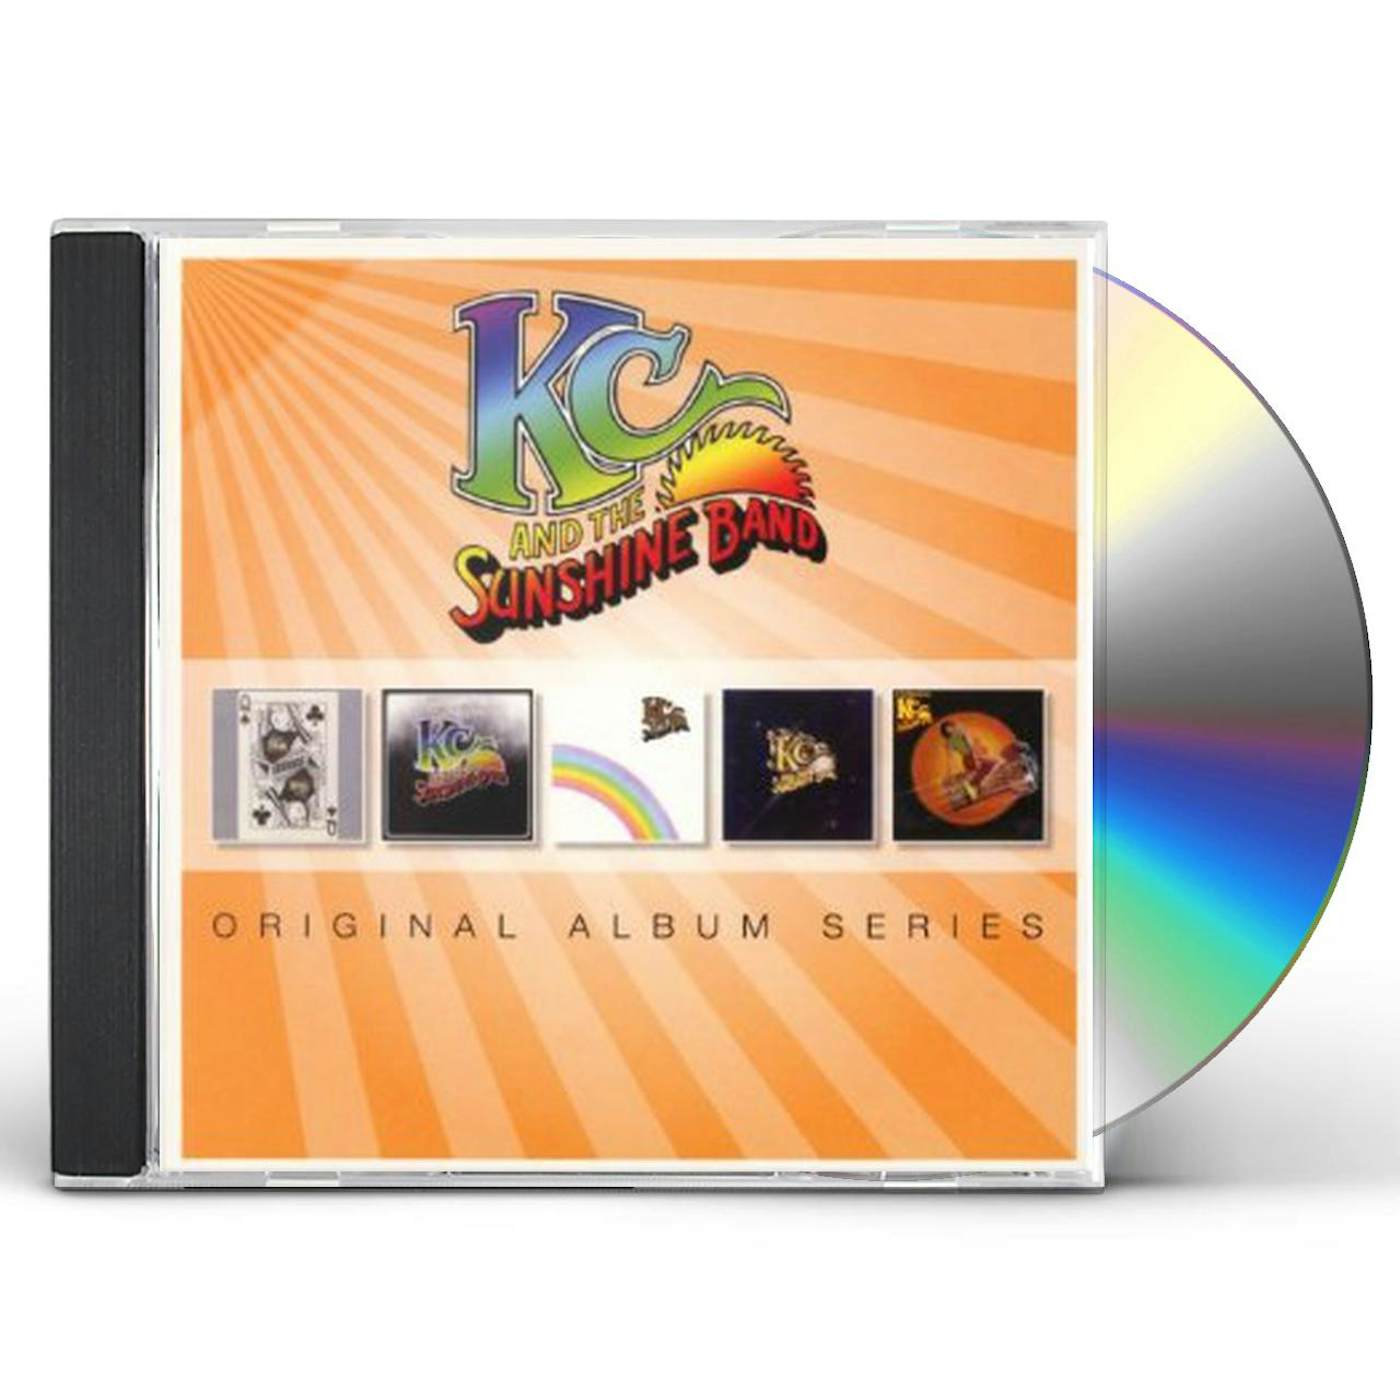 K.C. & SUNSHINE BAND ORIGINAL ALBUM SERIES CD